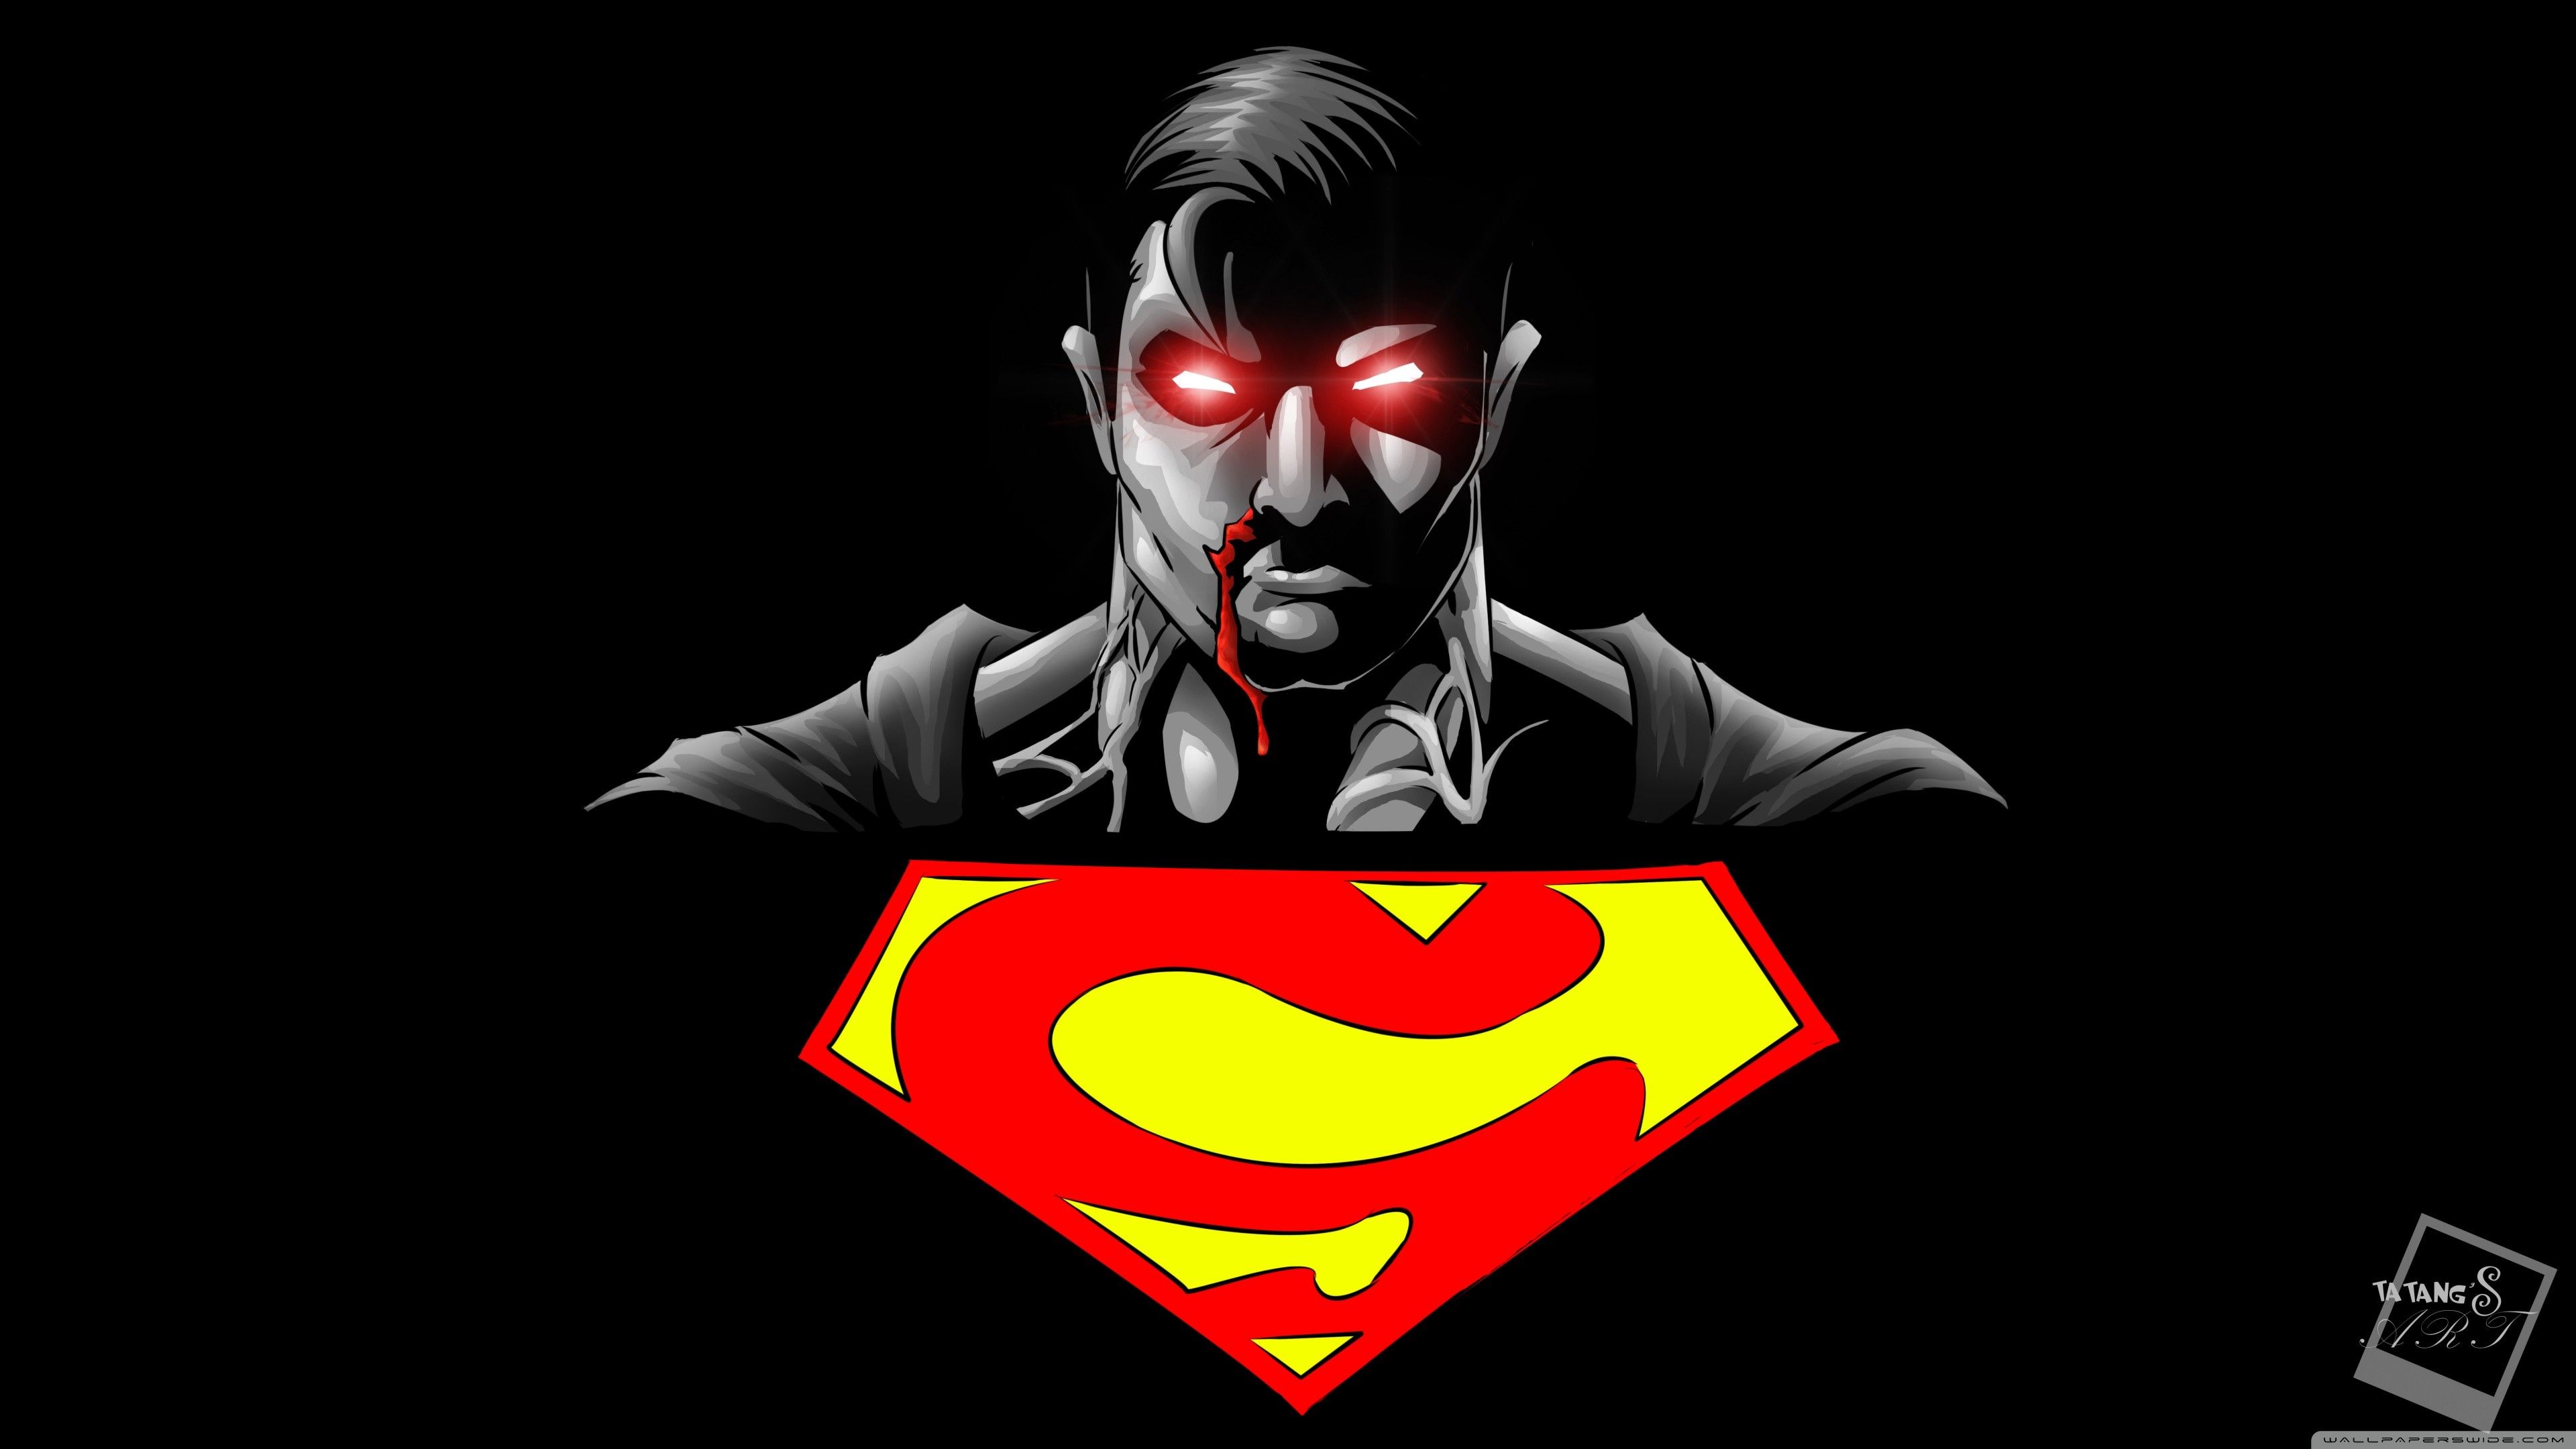 3840x2160 Batman Black Dark Dc Comics Superman Logos Logo Vs 4k Ultra Hd Superman Hd Wallpaper Background Download